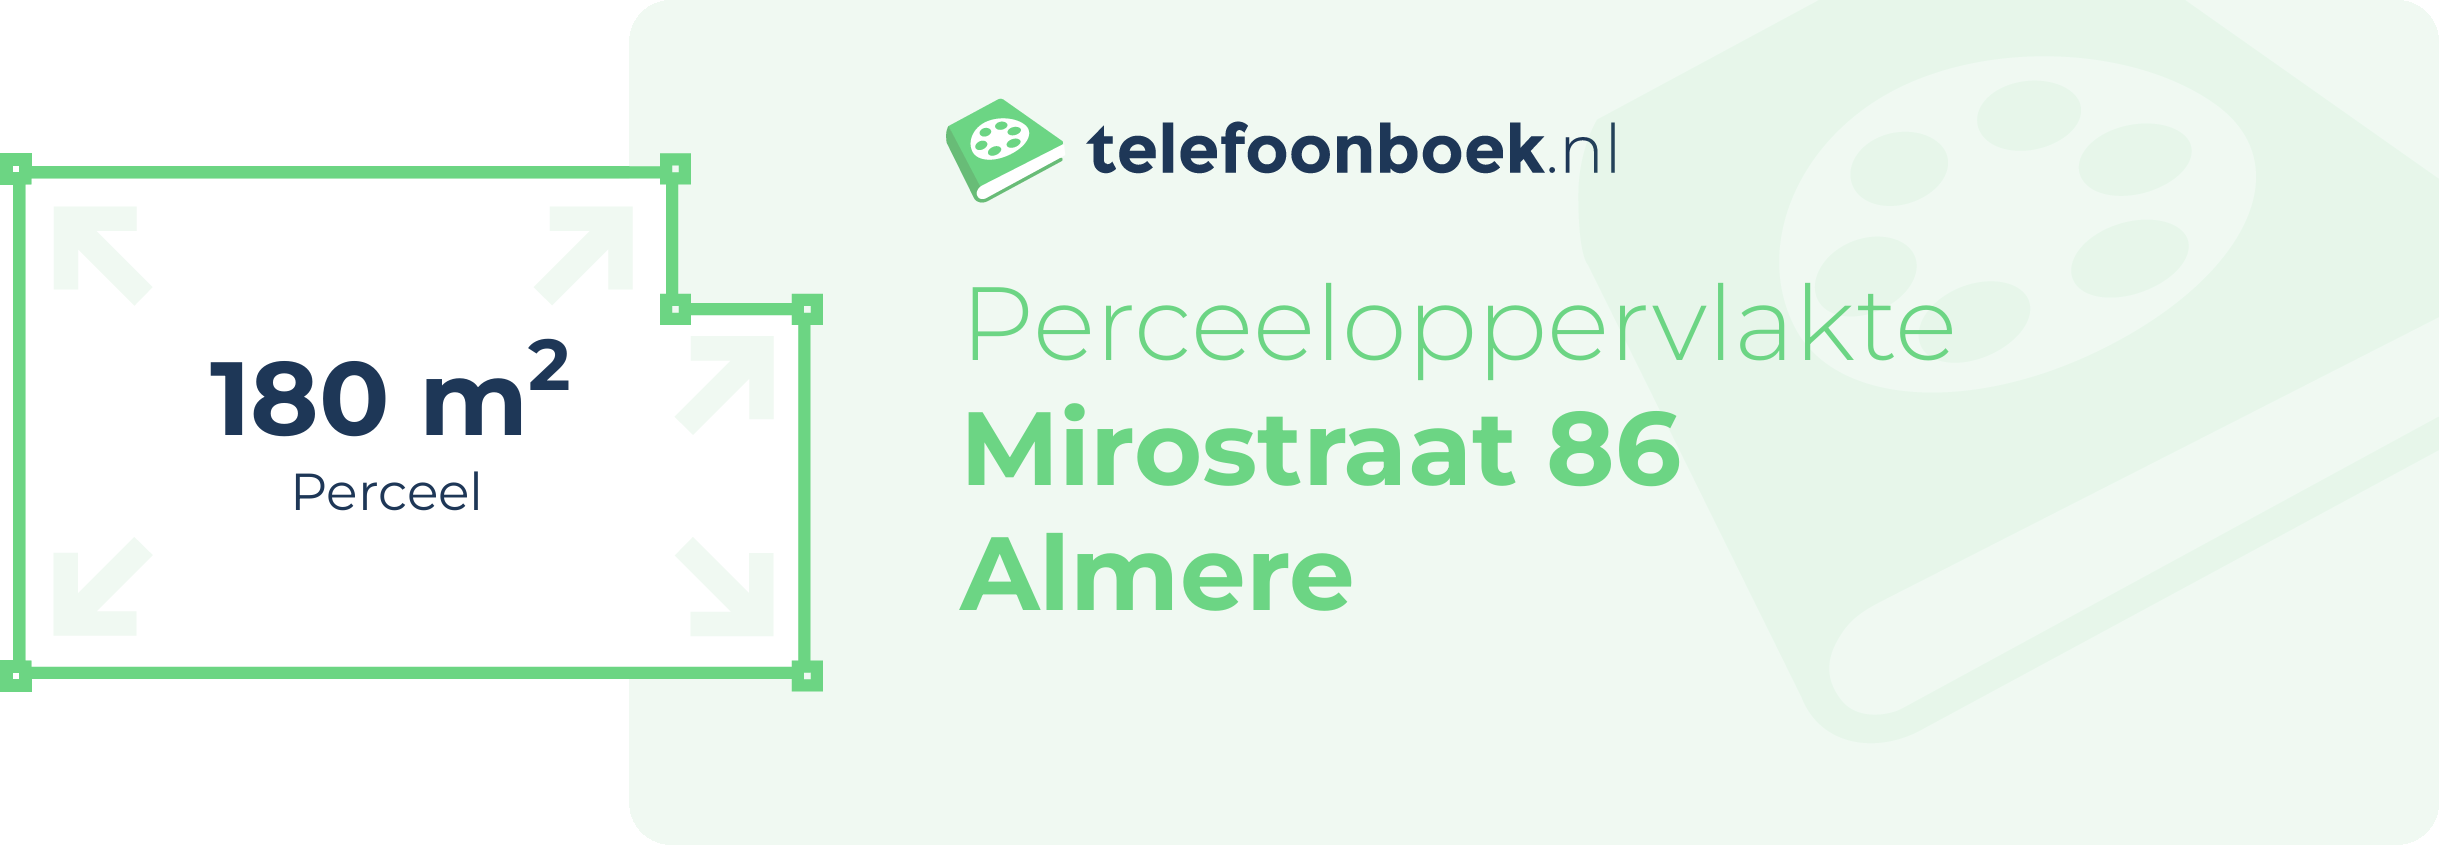 Perceeloppervlakte Mirostraat 86 Almere